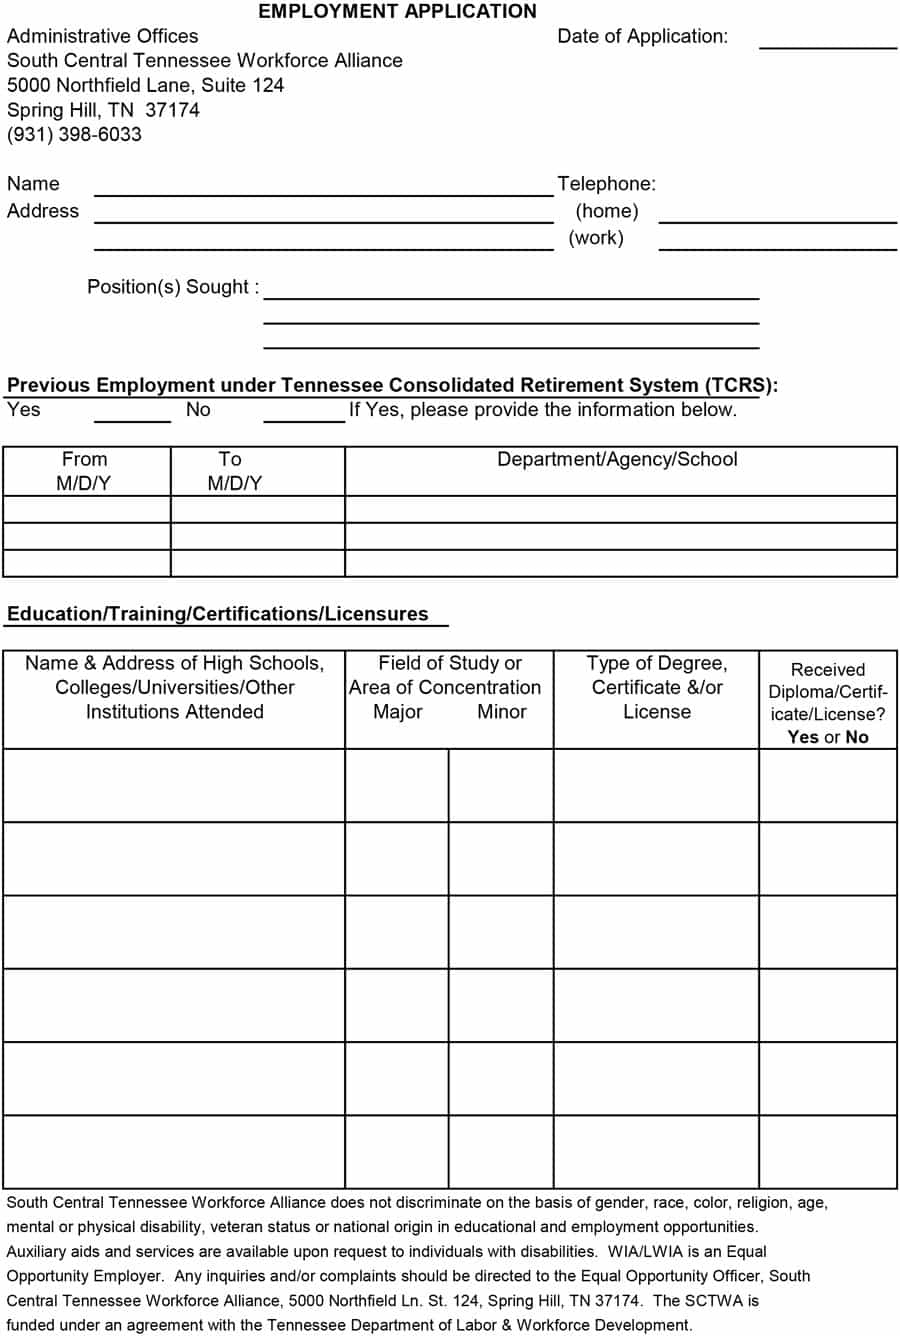 50 Free Employment / Job Application Form Templates [Printable - Free Printable Membership Forms